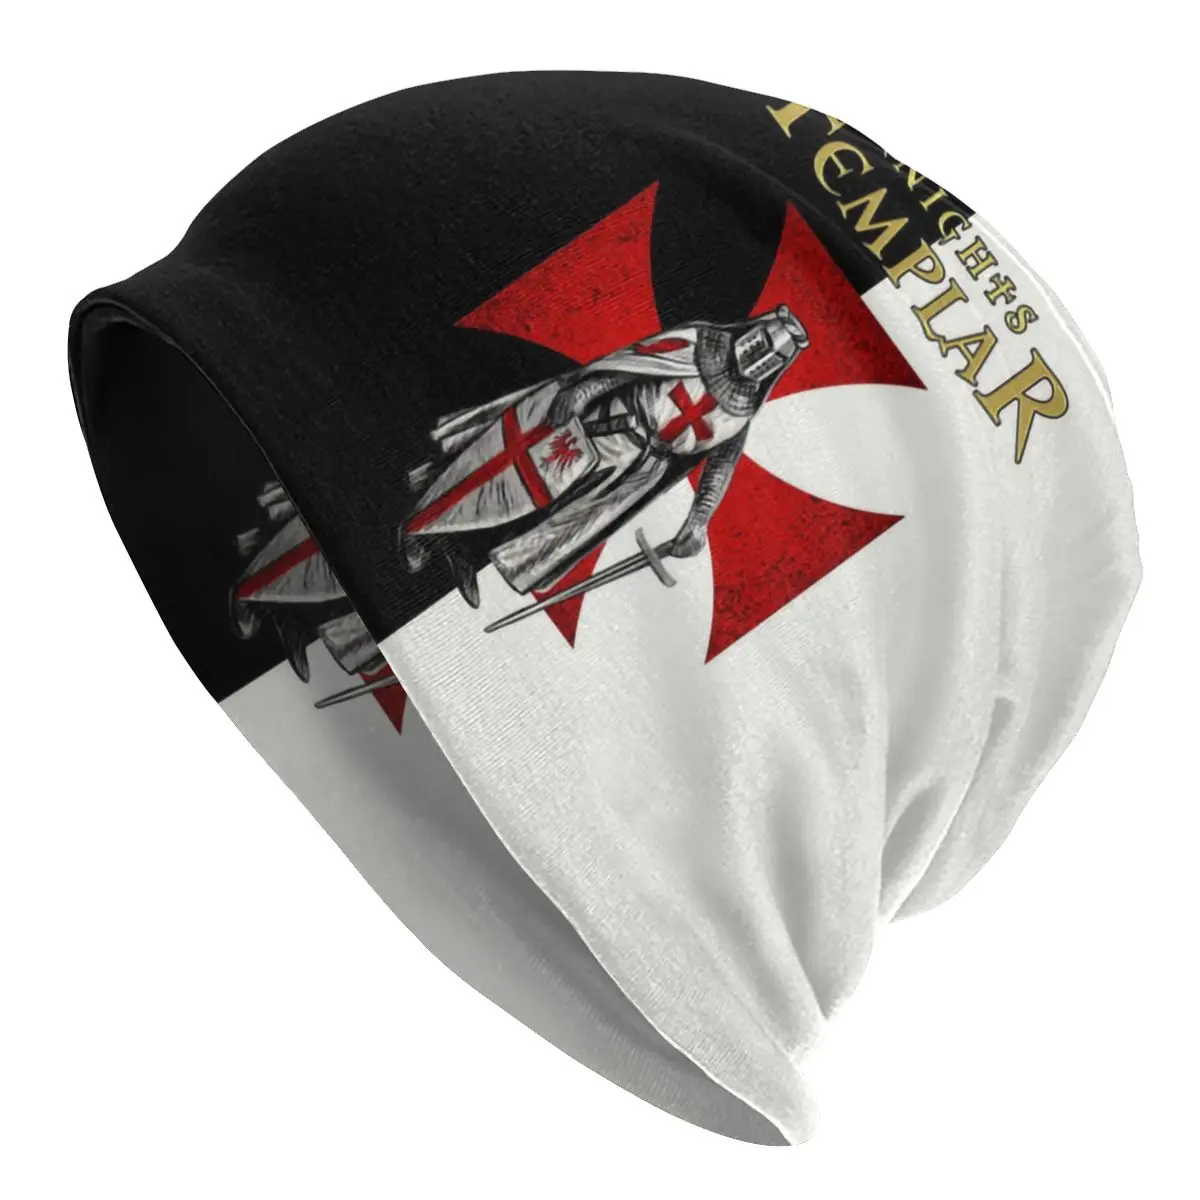 Knight Templar Beanies Caps For Men Women Unisex Cool Winter Warm Knit Hat Adult Crusades Knights Christian Warrior Bonnet Hats